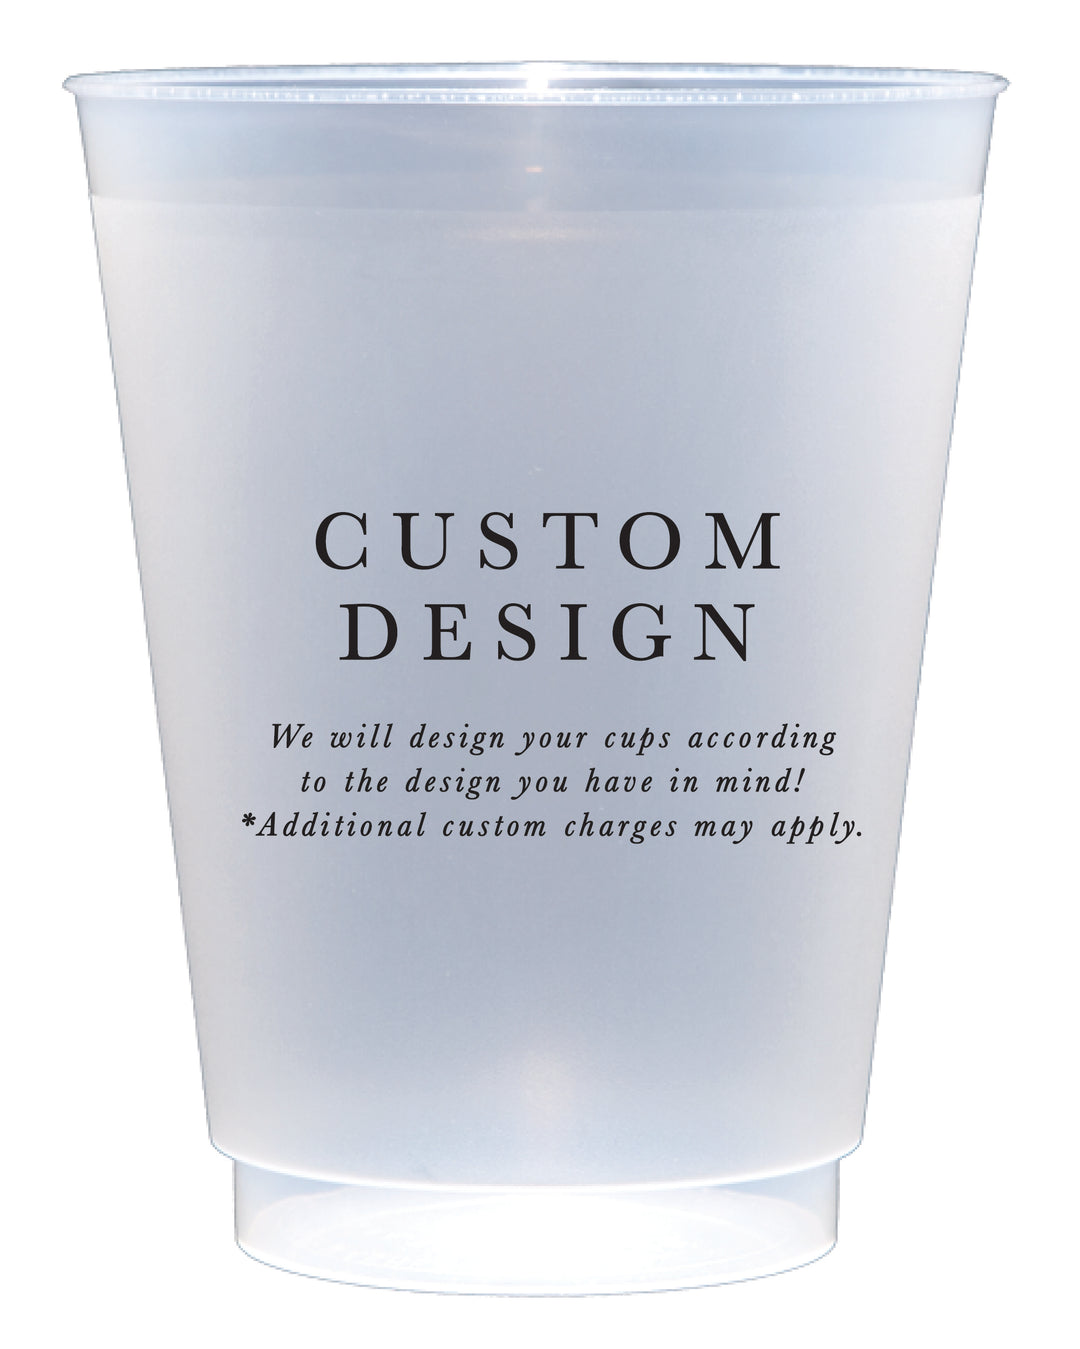 Custom Design Shatterproof Cup